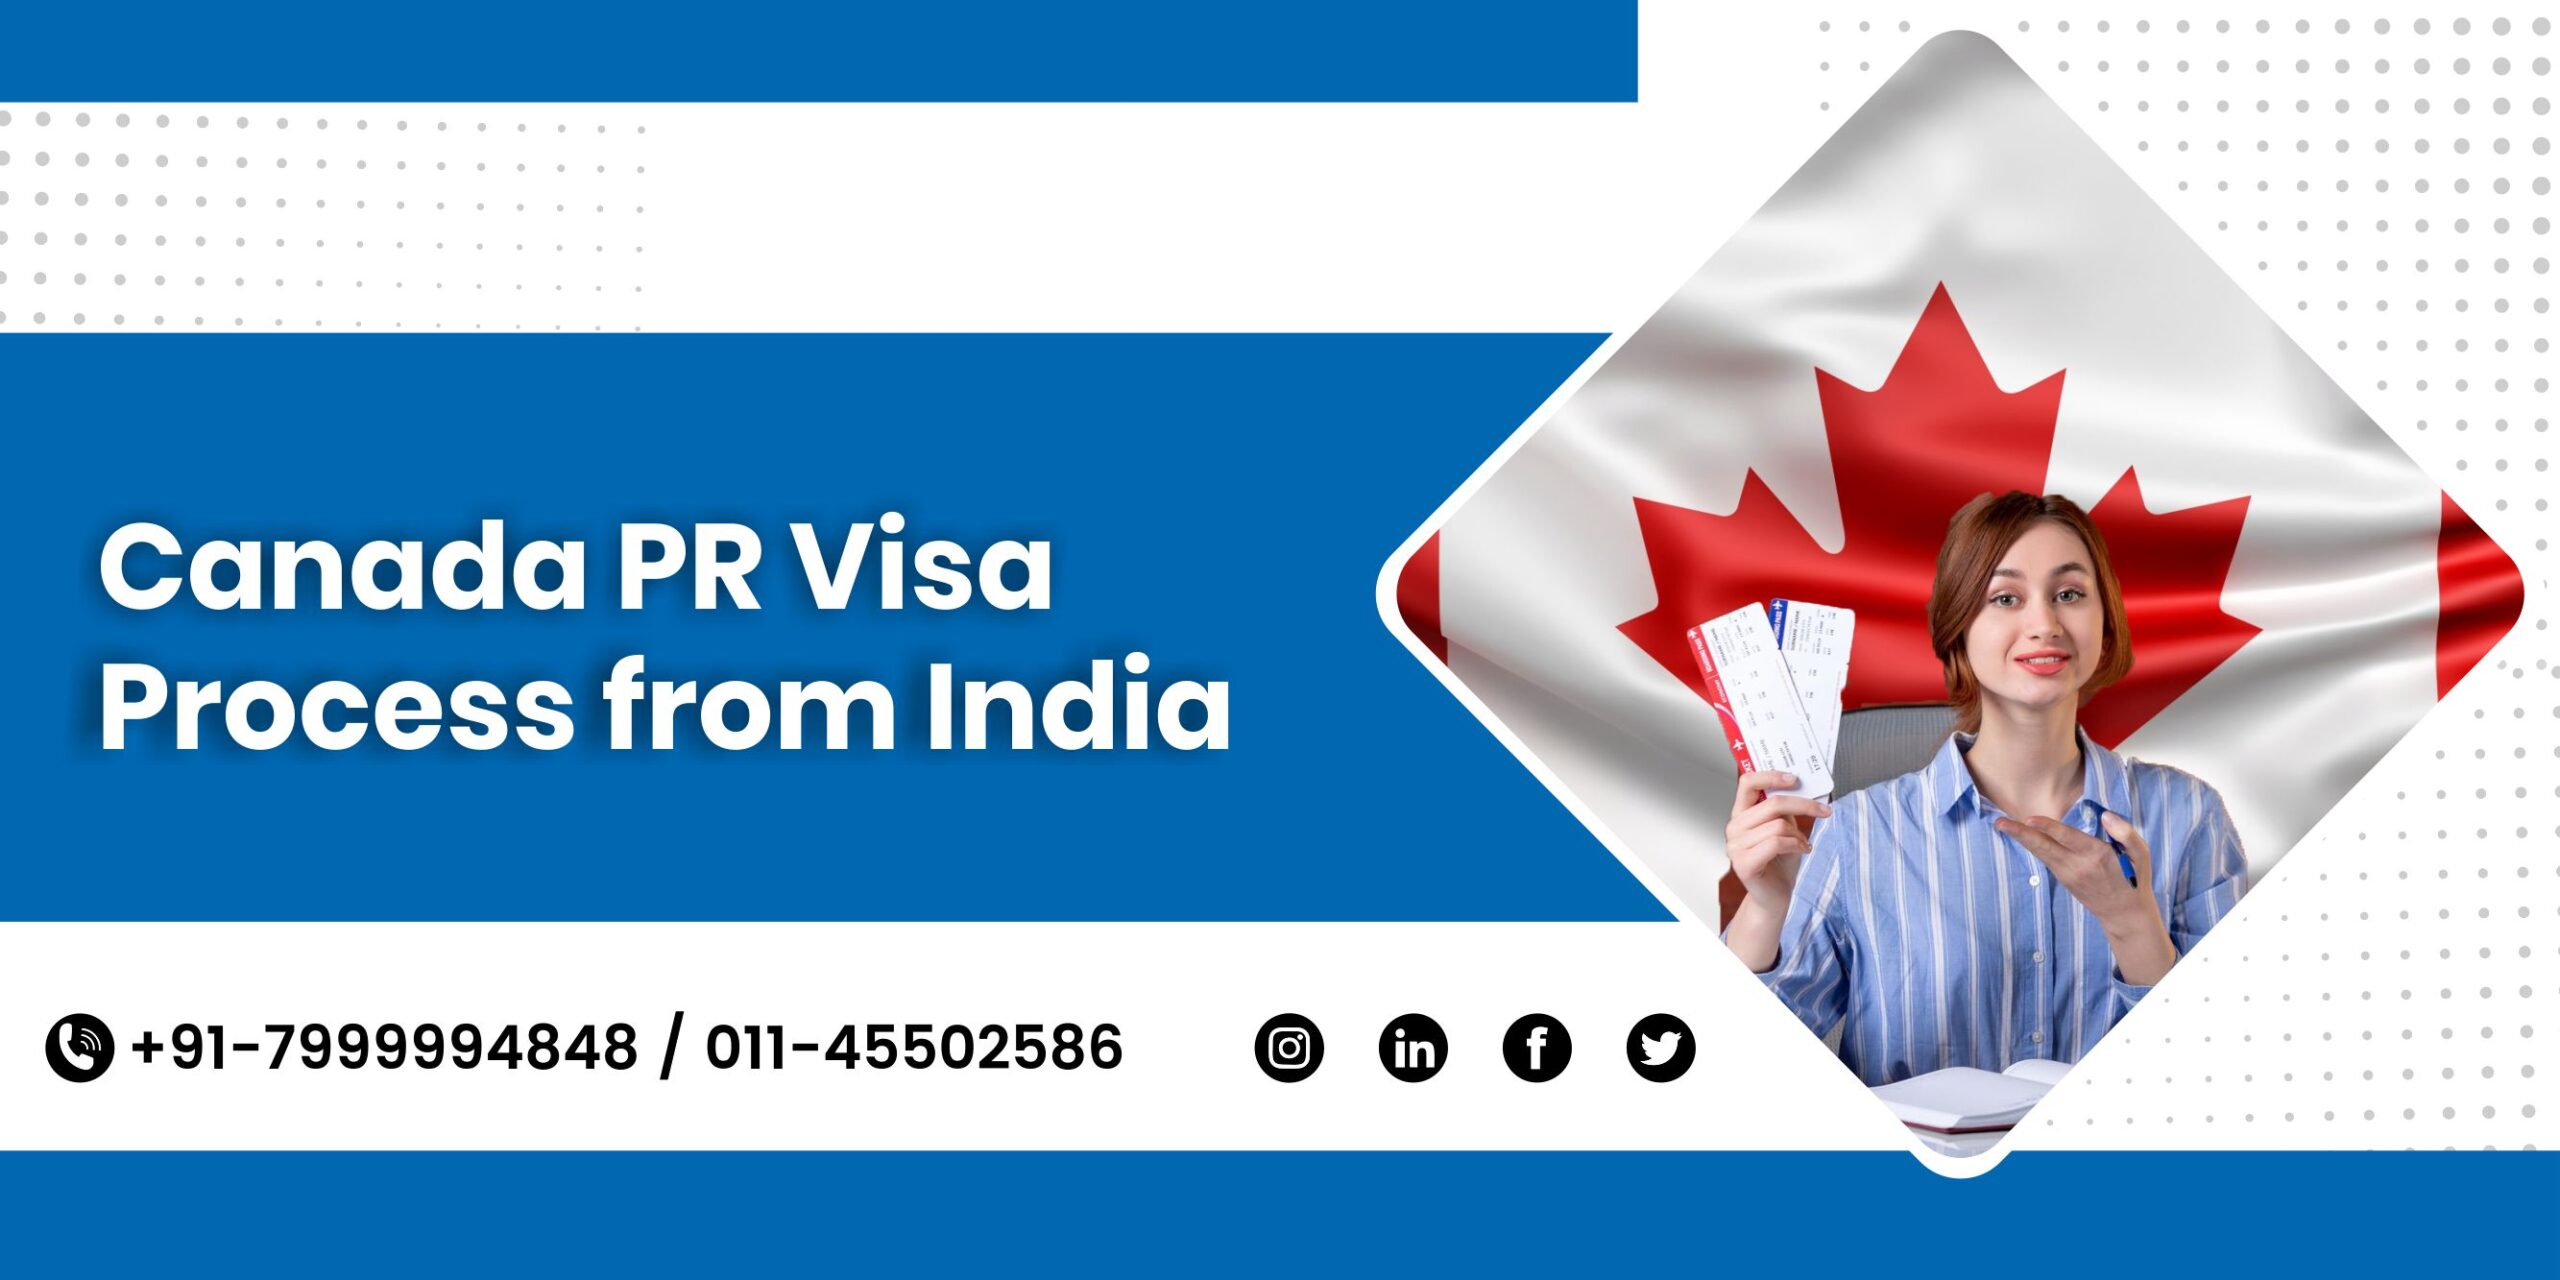 Canada PR Visa Process from India